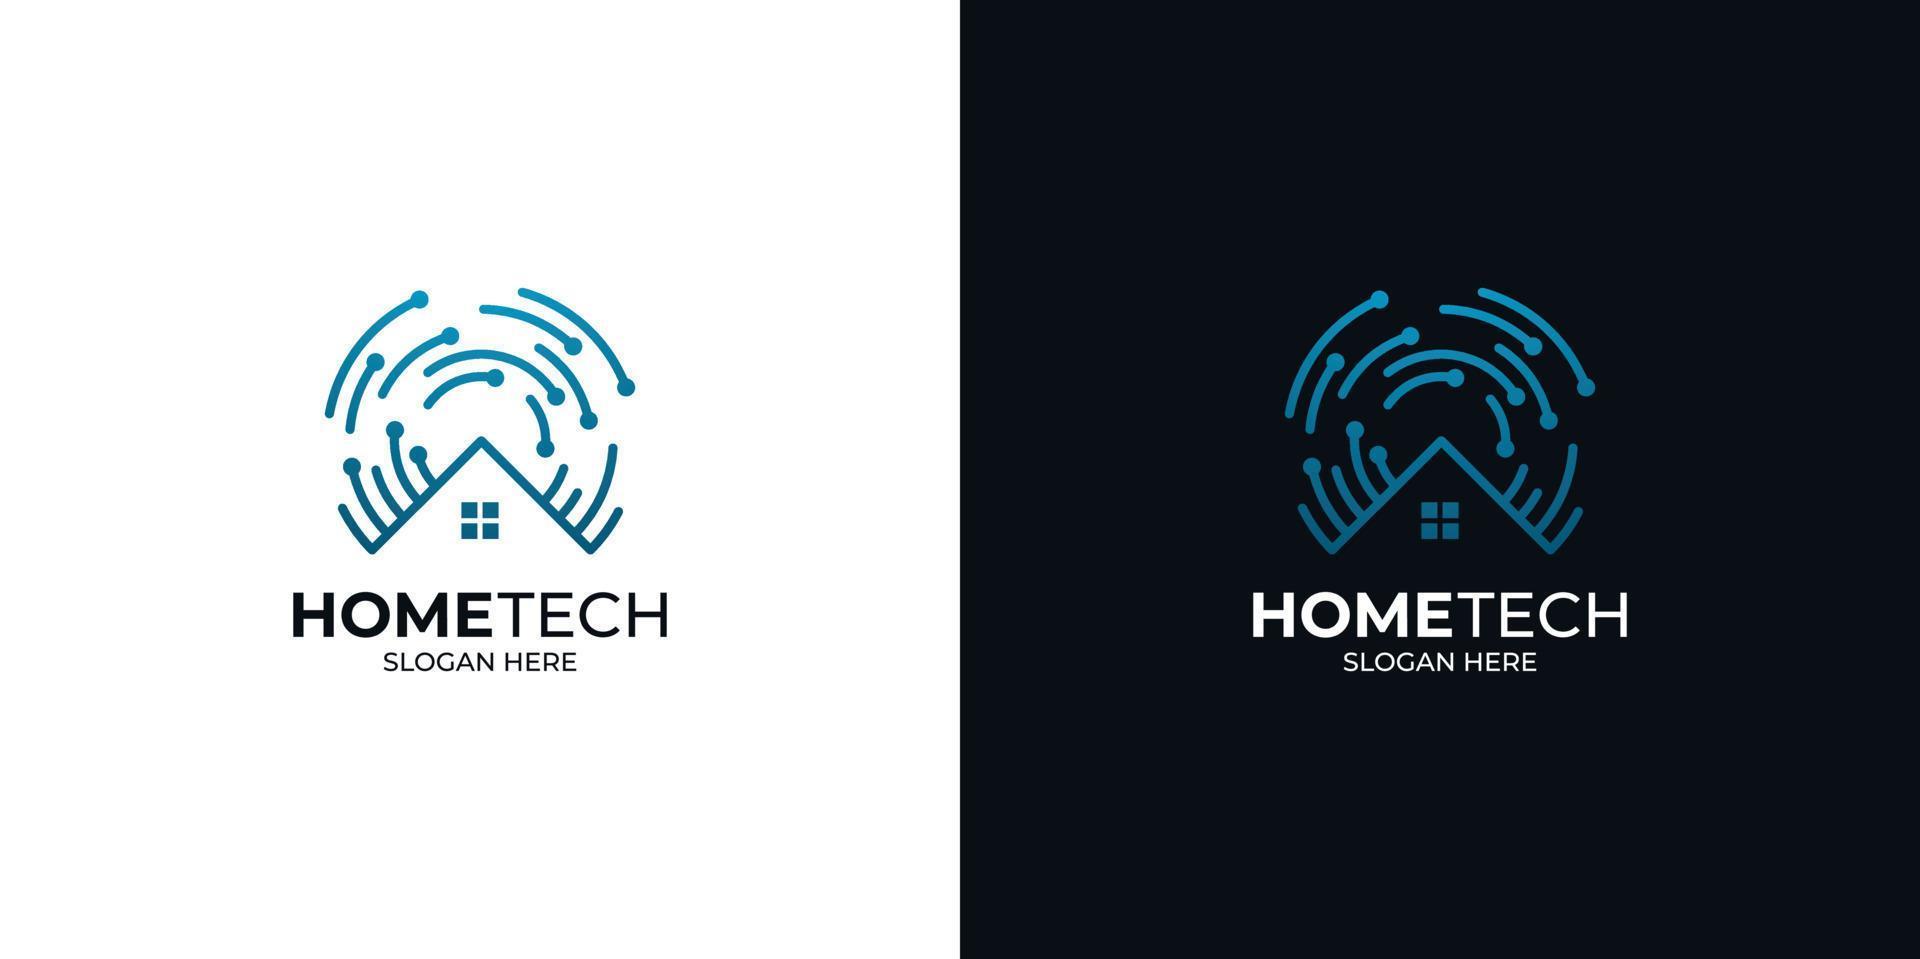 minimalist style home tech logo set vector